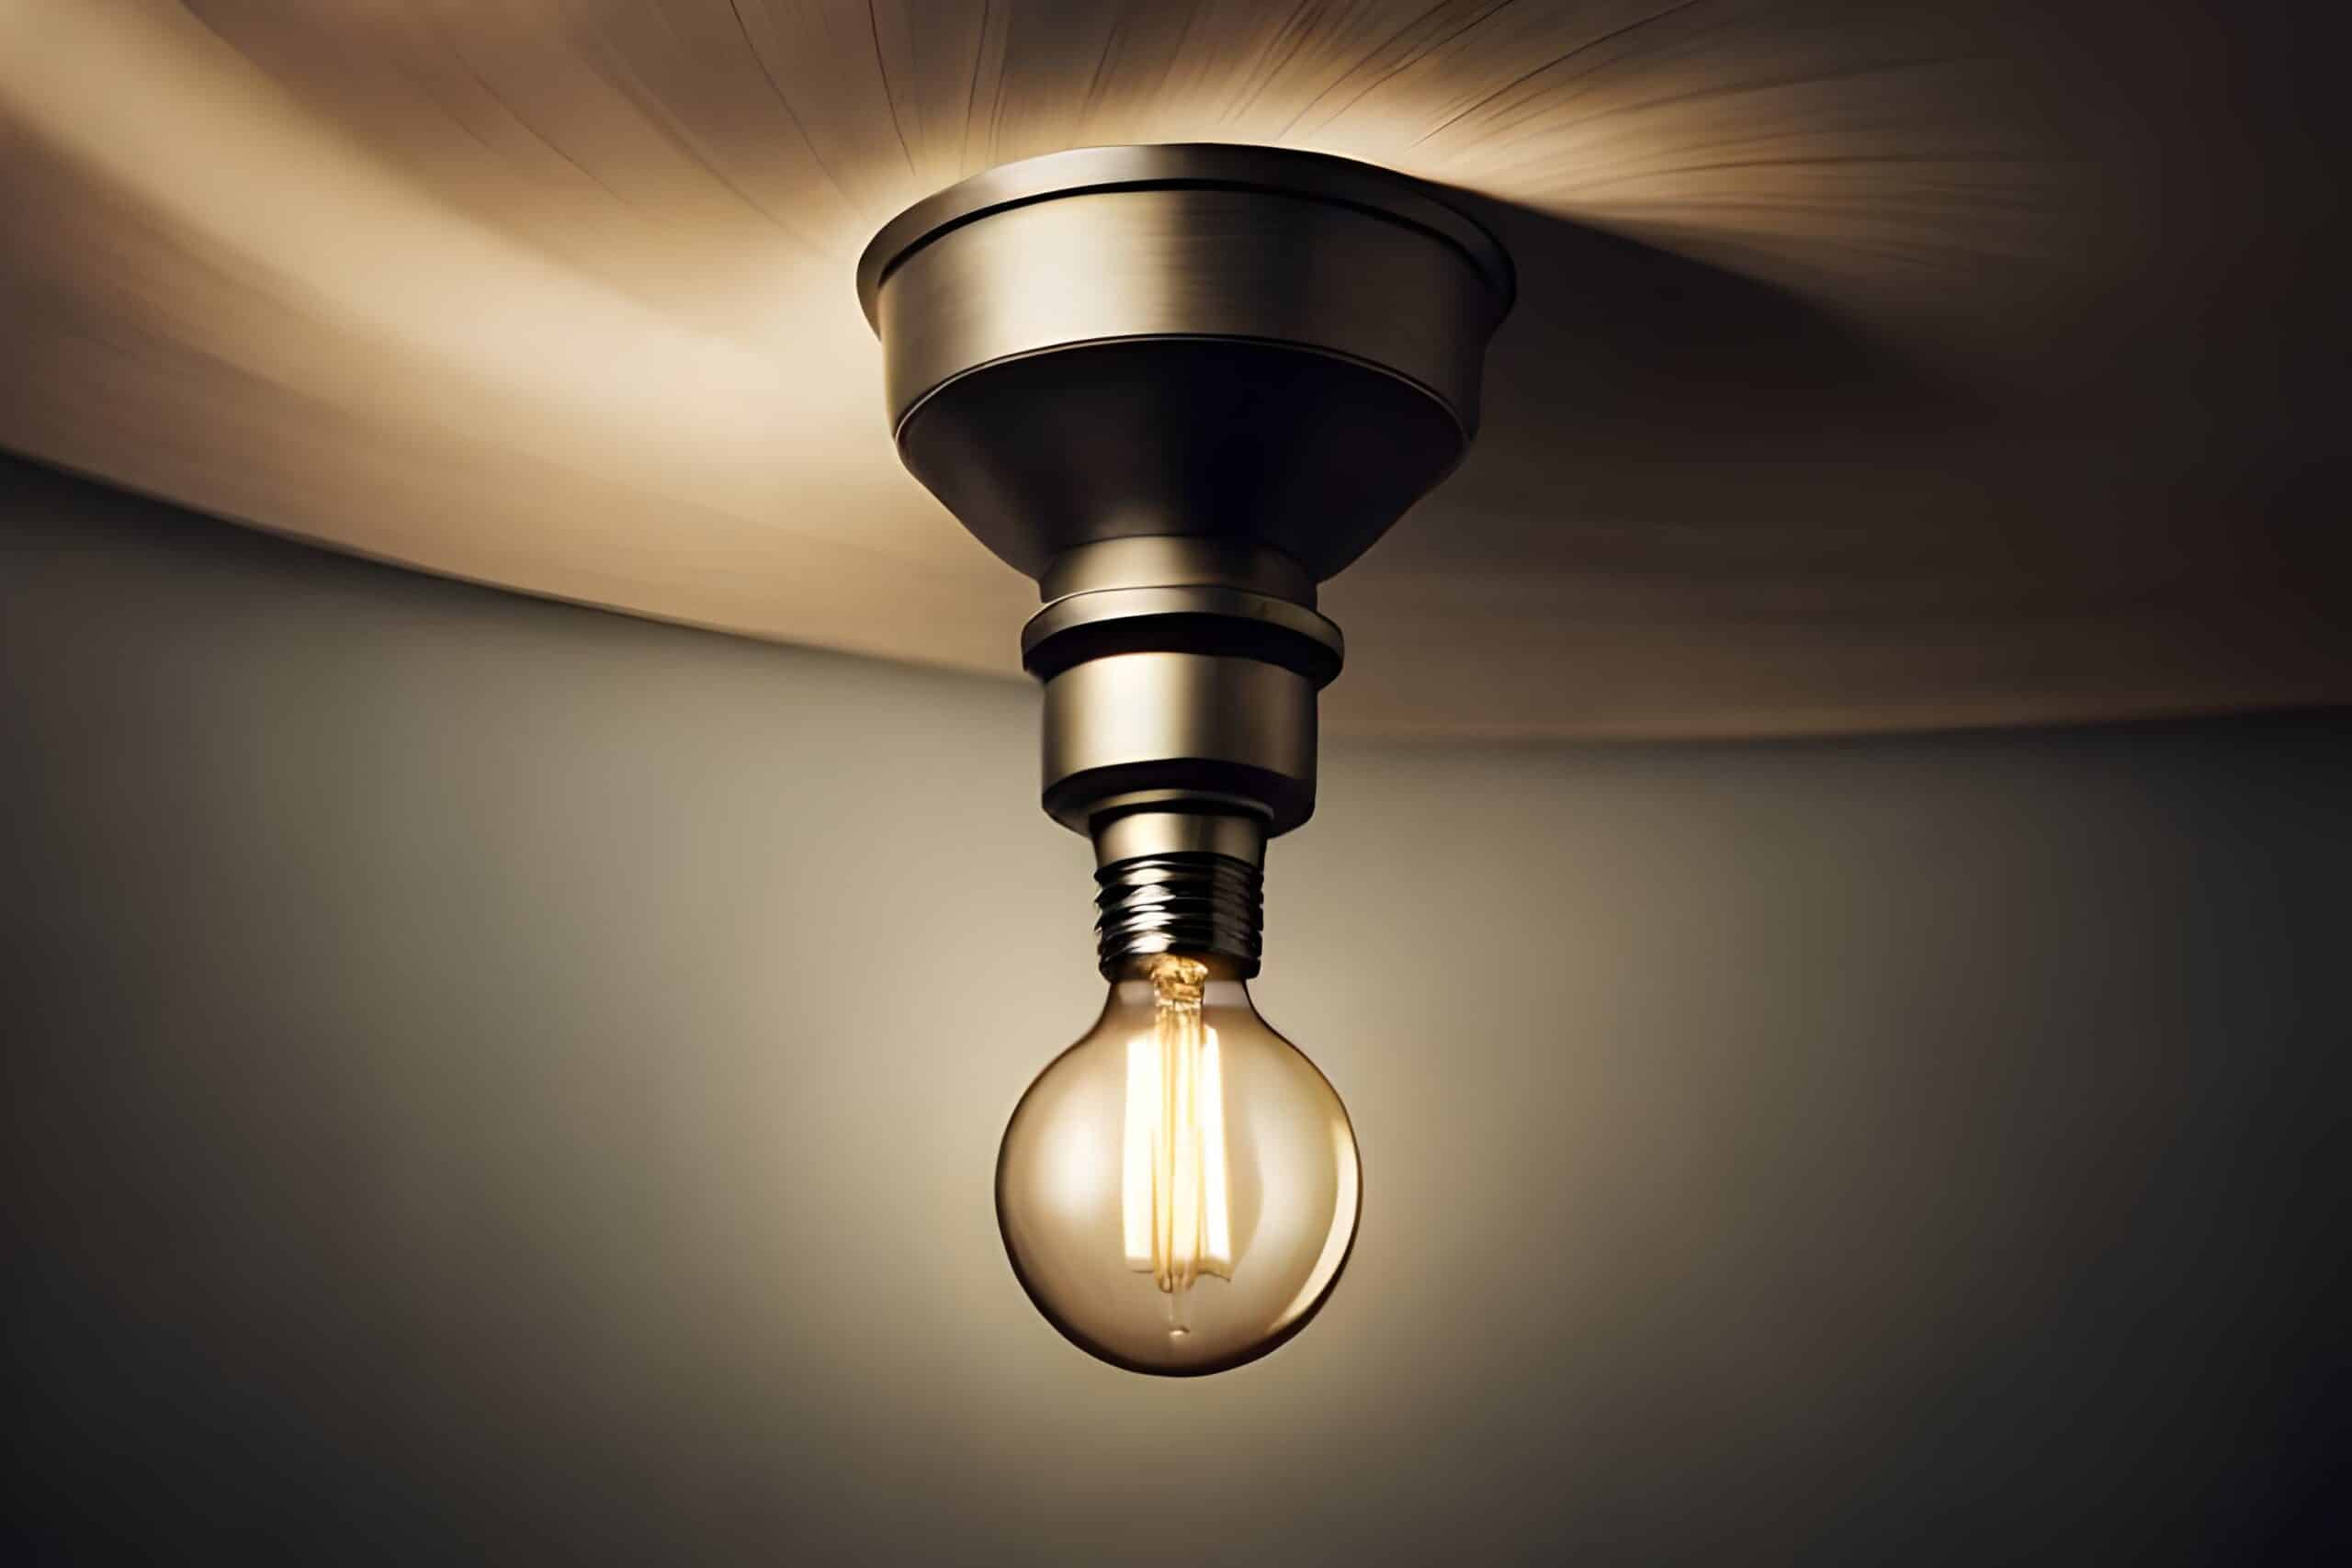 www.appr.com : How To Install Smart Light Bulbs?